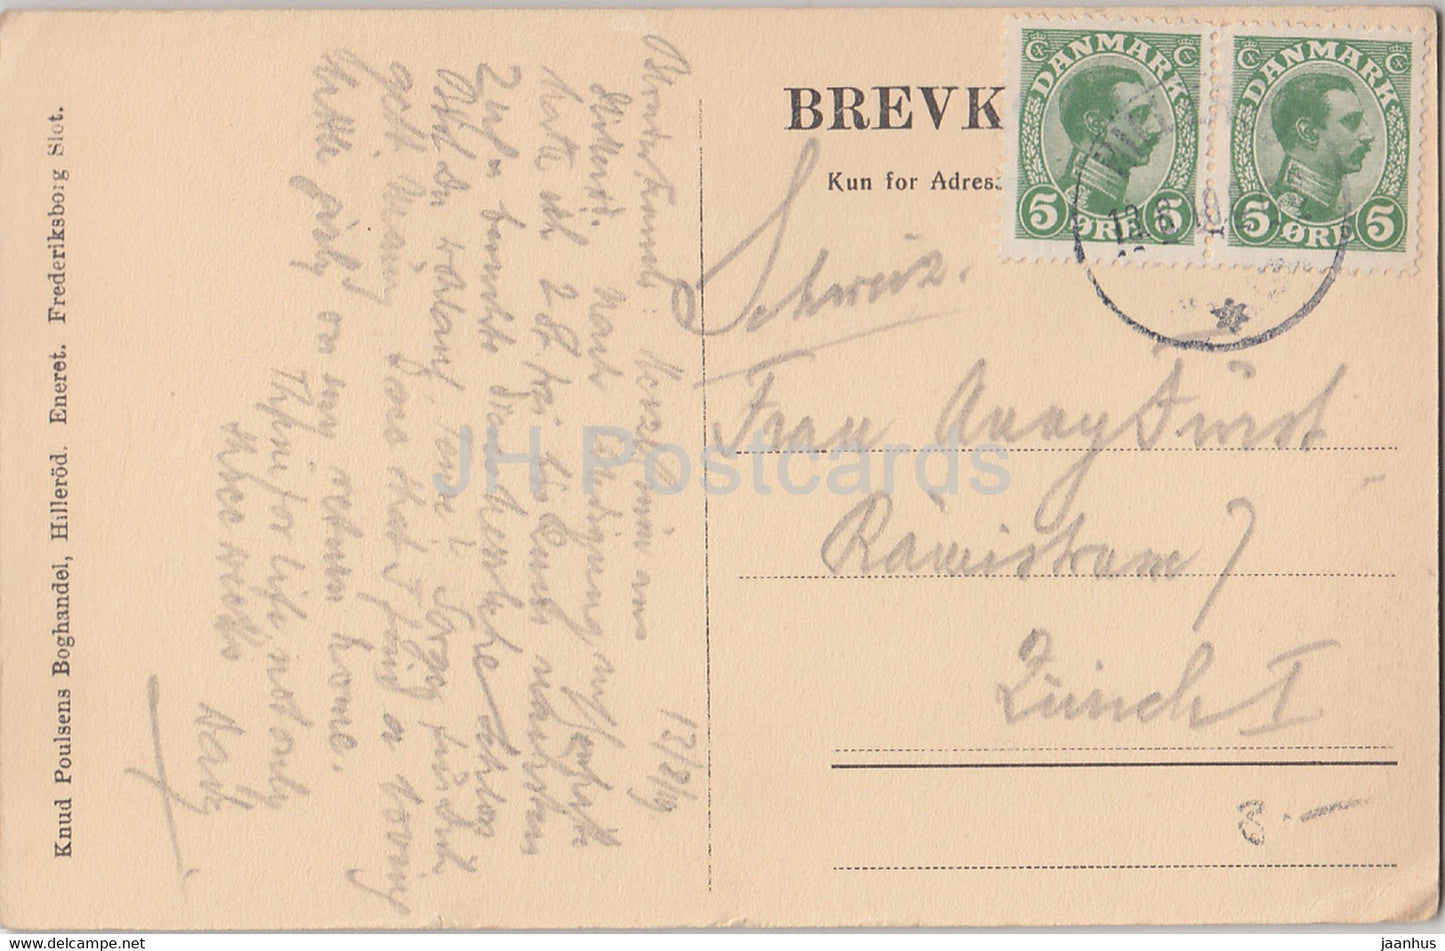 Frederiksborg Slot - castle - old postcard - 1919 - Denmark - used